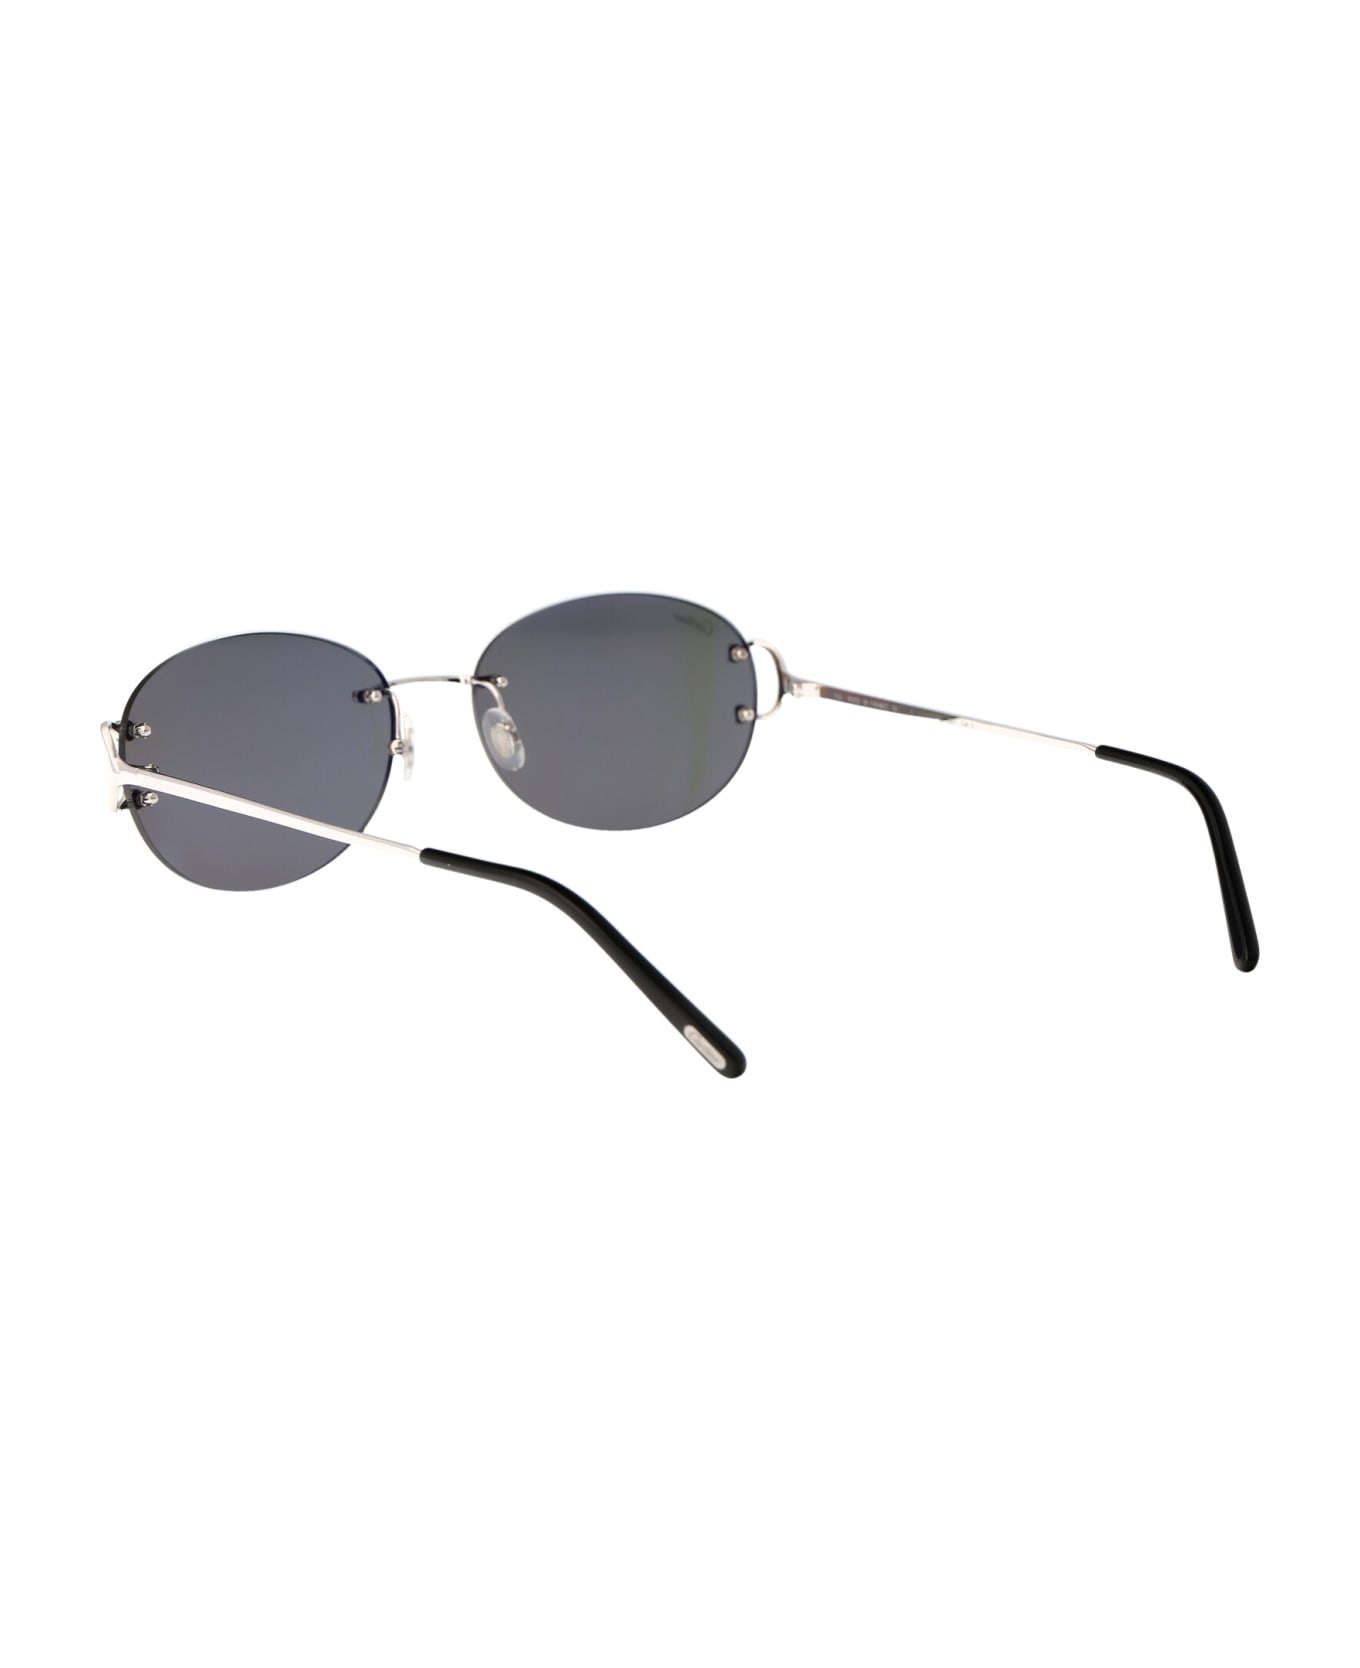 Cartier Eyewear Ct0029rs Sunglasses - 001 SILVER SILVER GREY サングラス